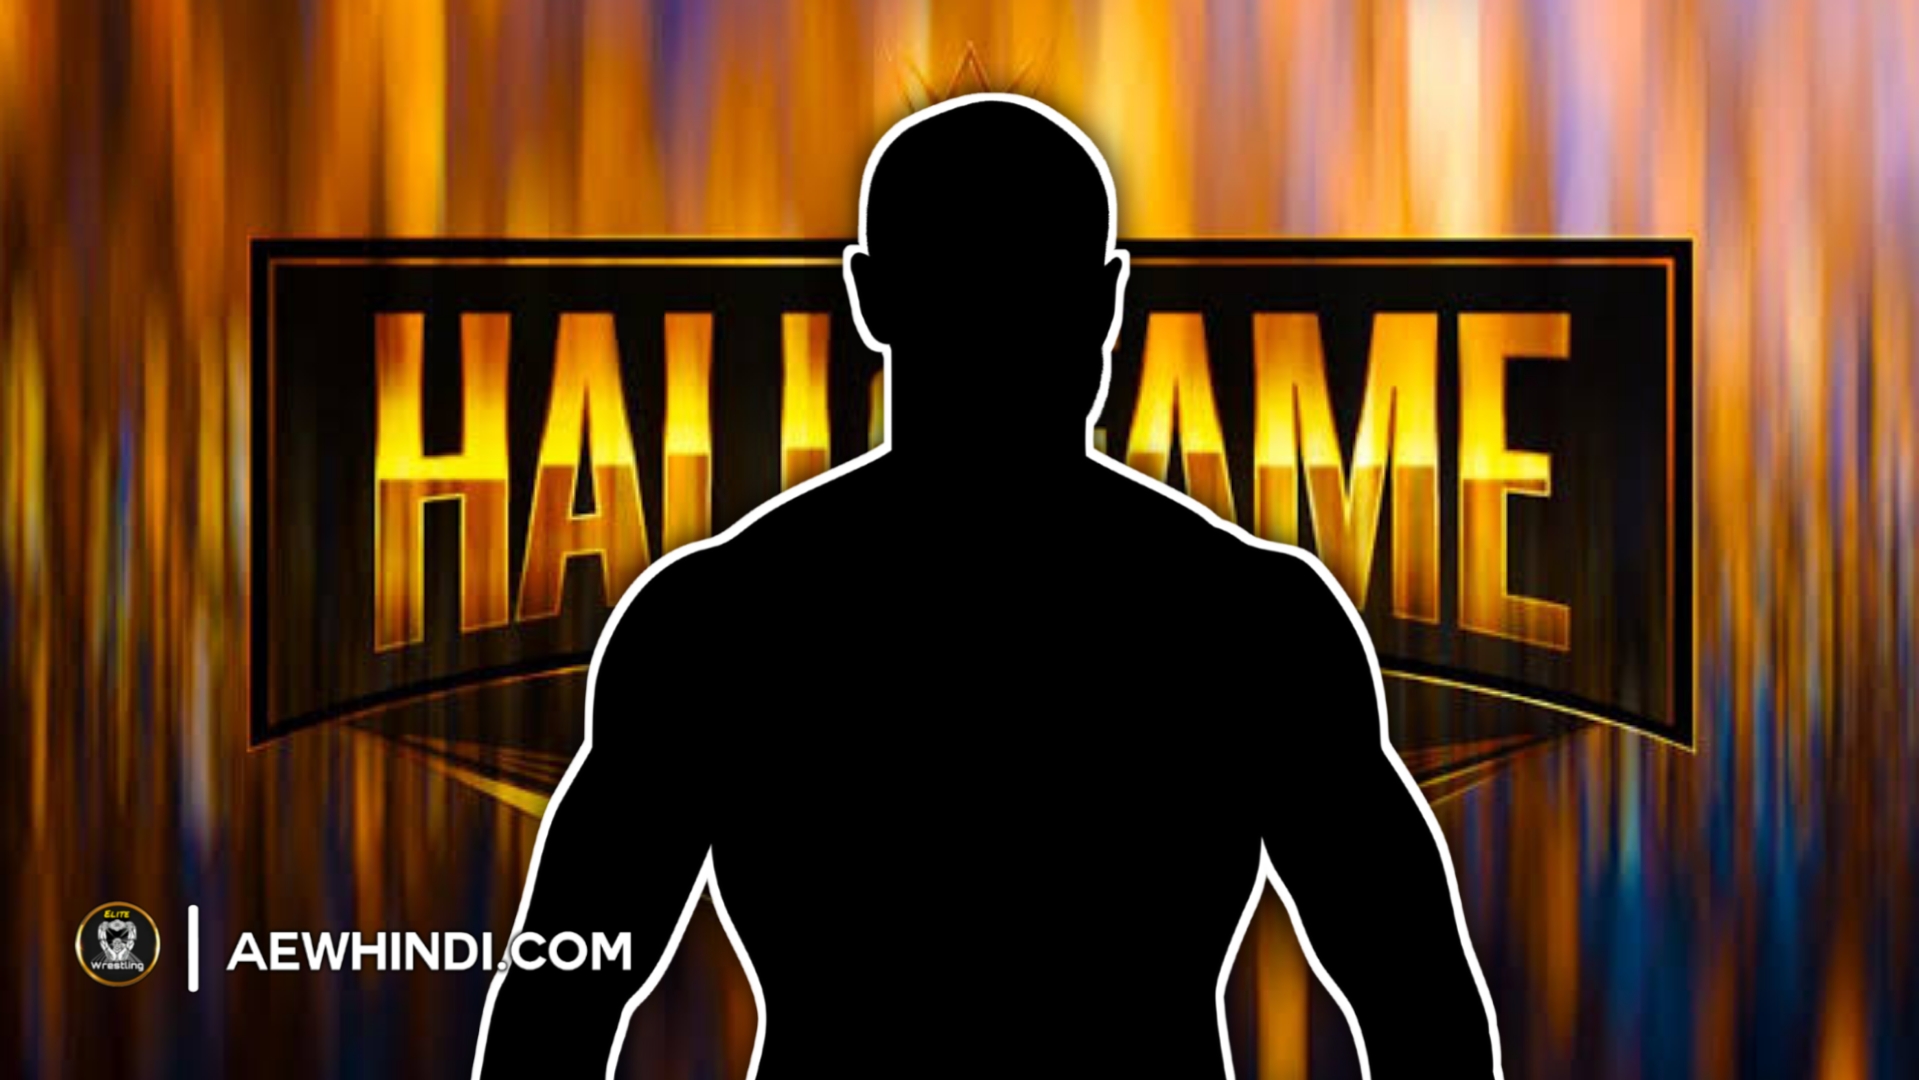 WWE Hall of Famer set to make AEW appearance